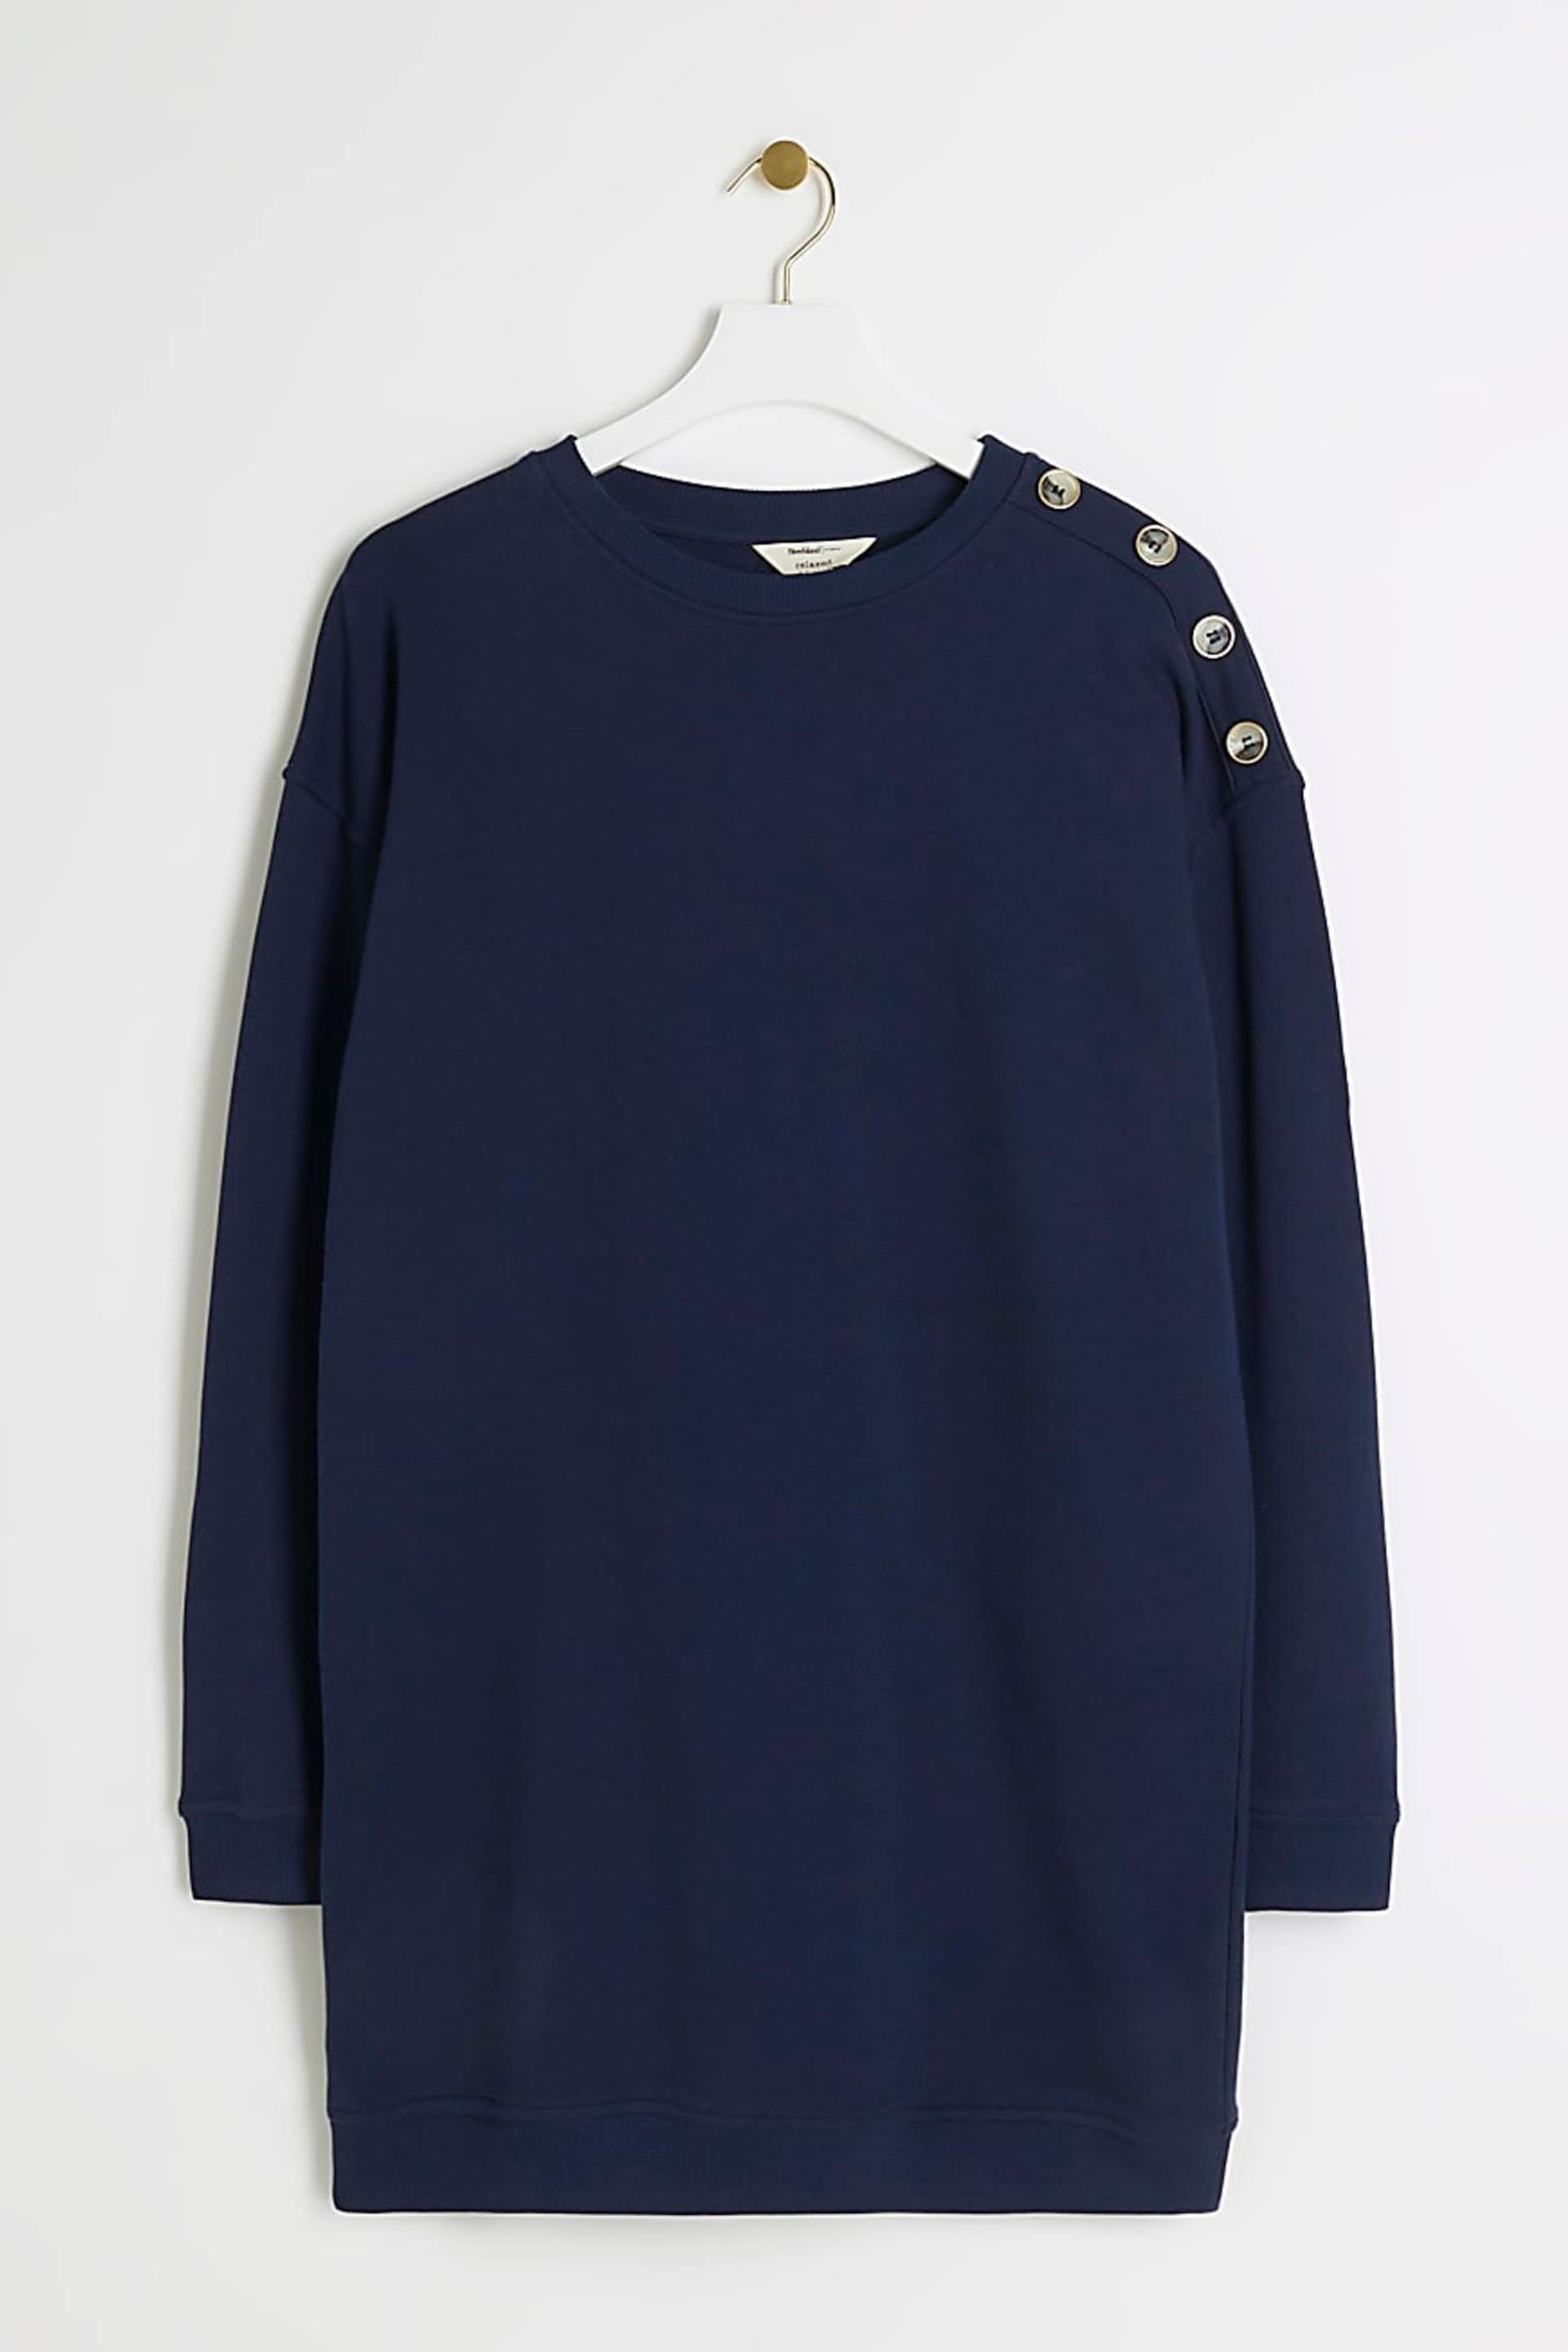 River Island Navy Button Detail Sweatshirt Mini Dress - Image 5 of 6